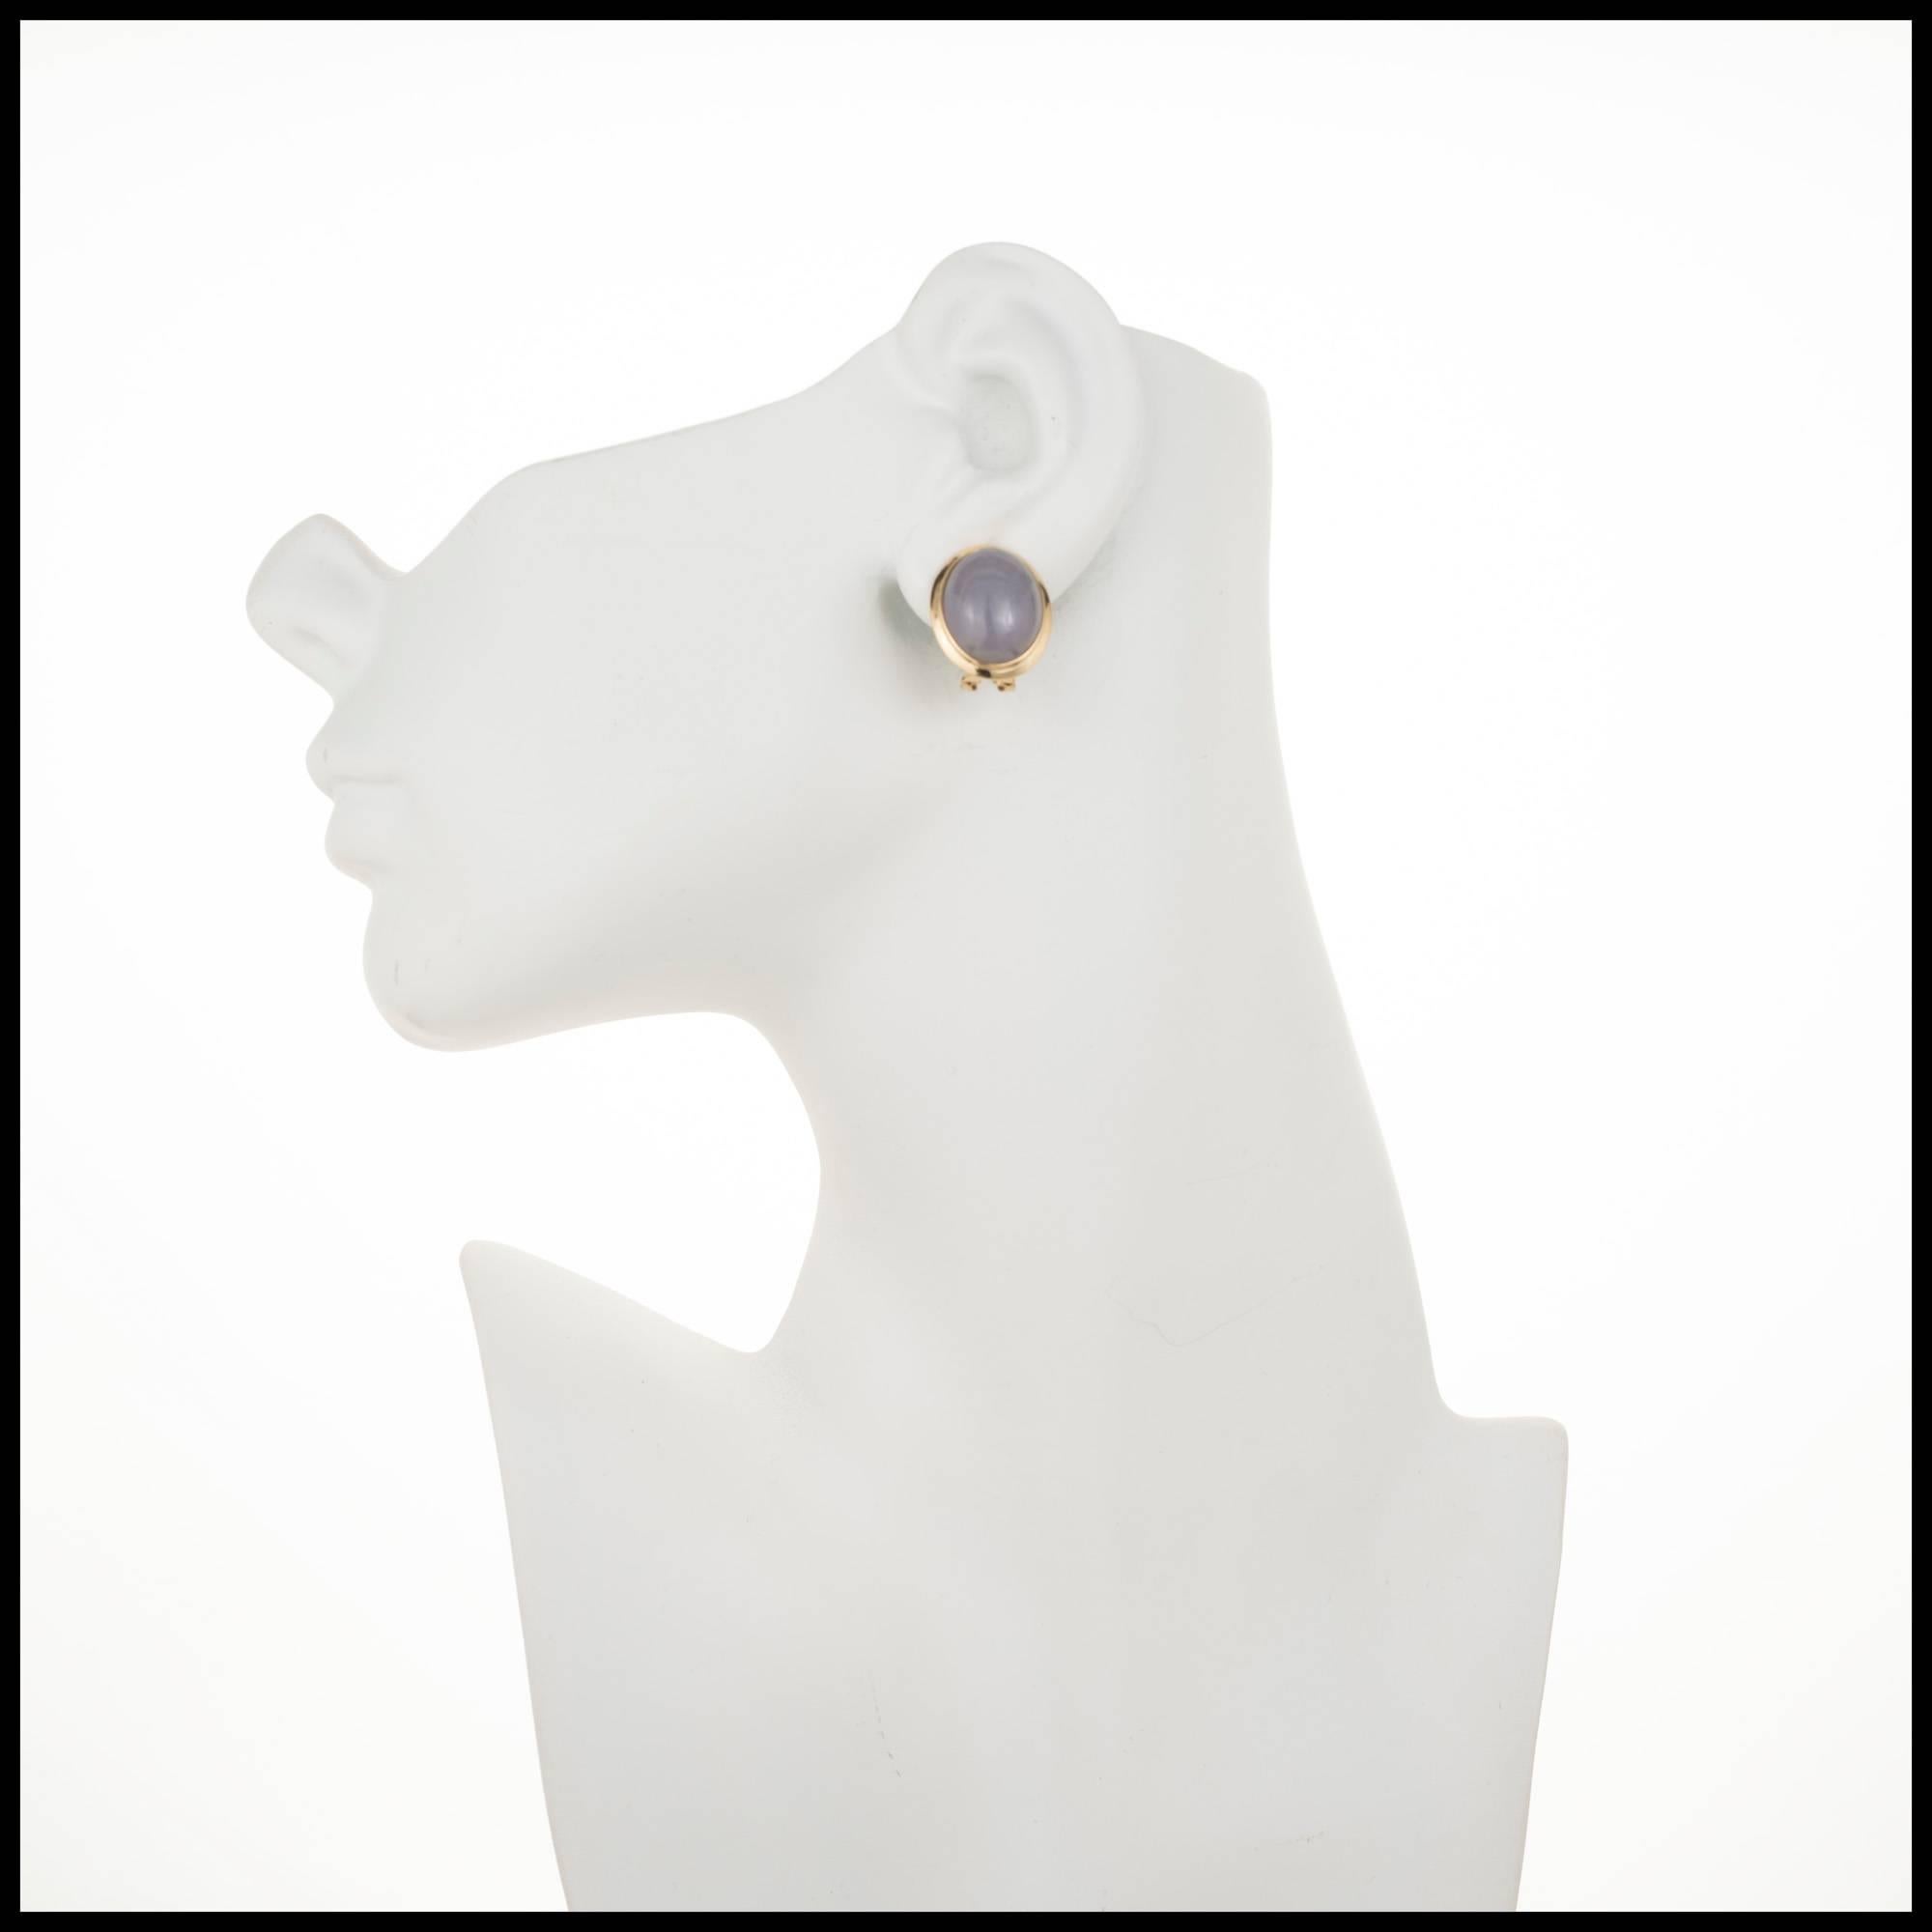 jadeite earrings for sale